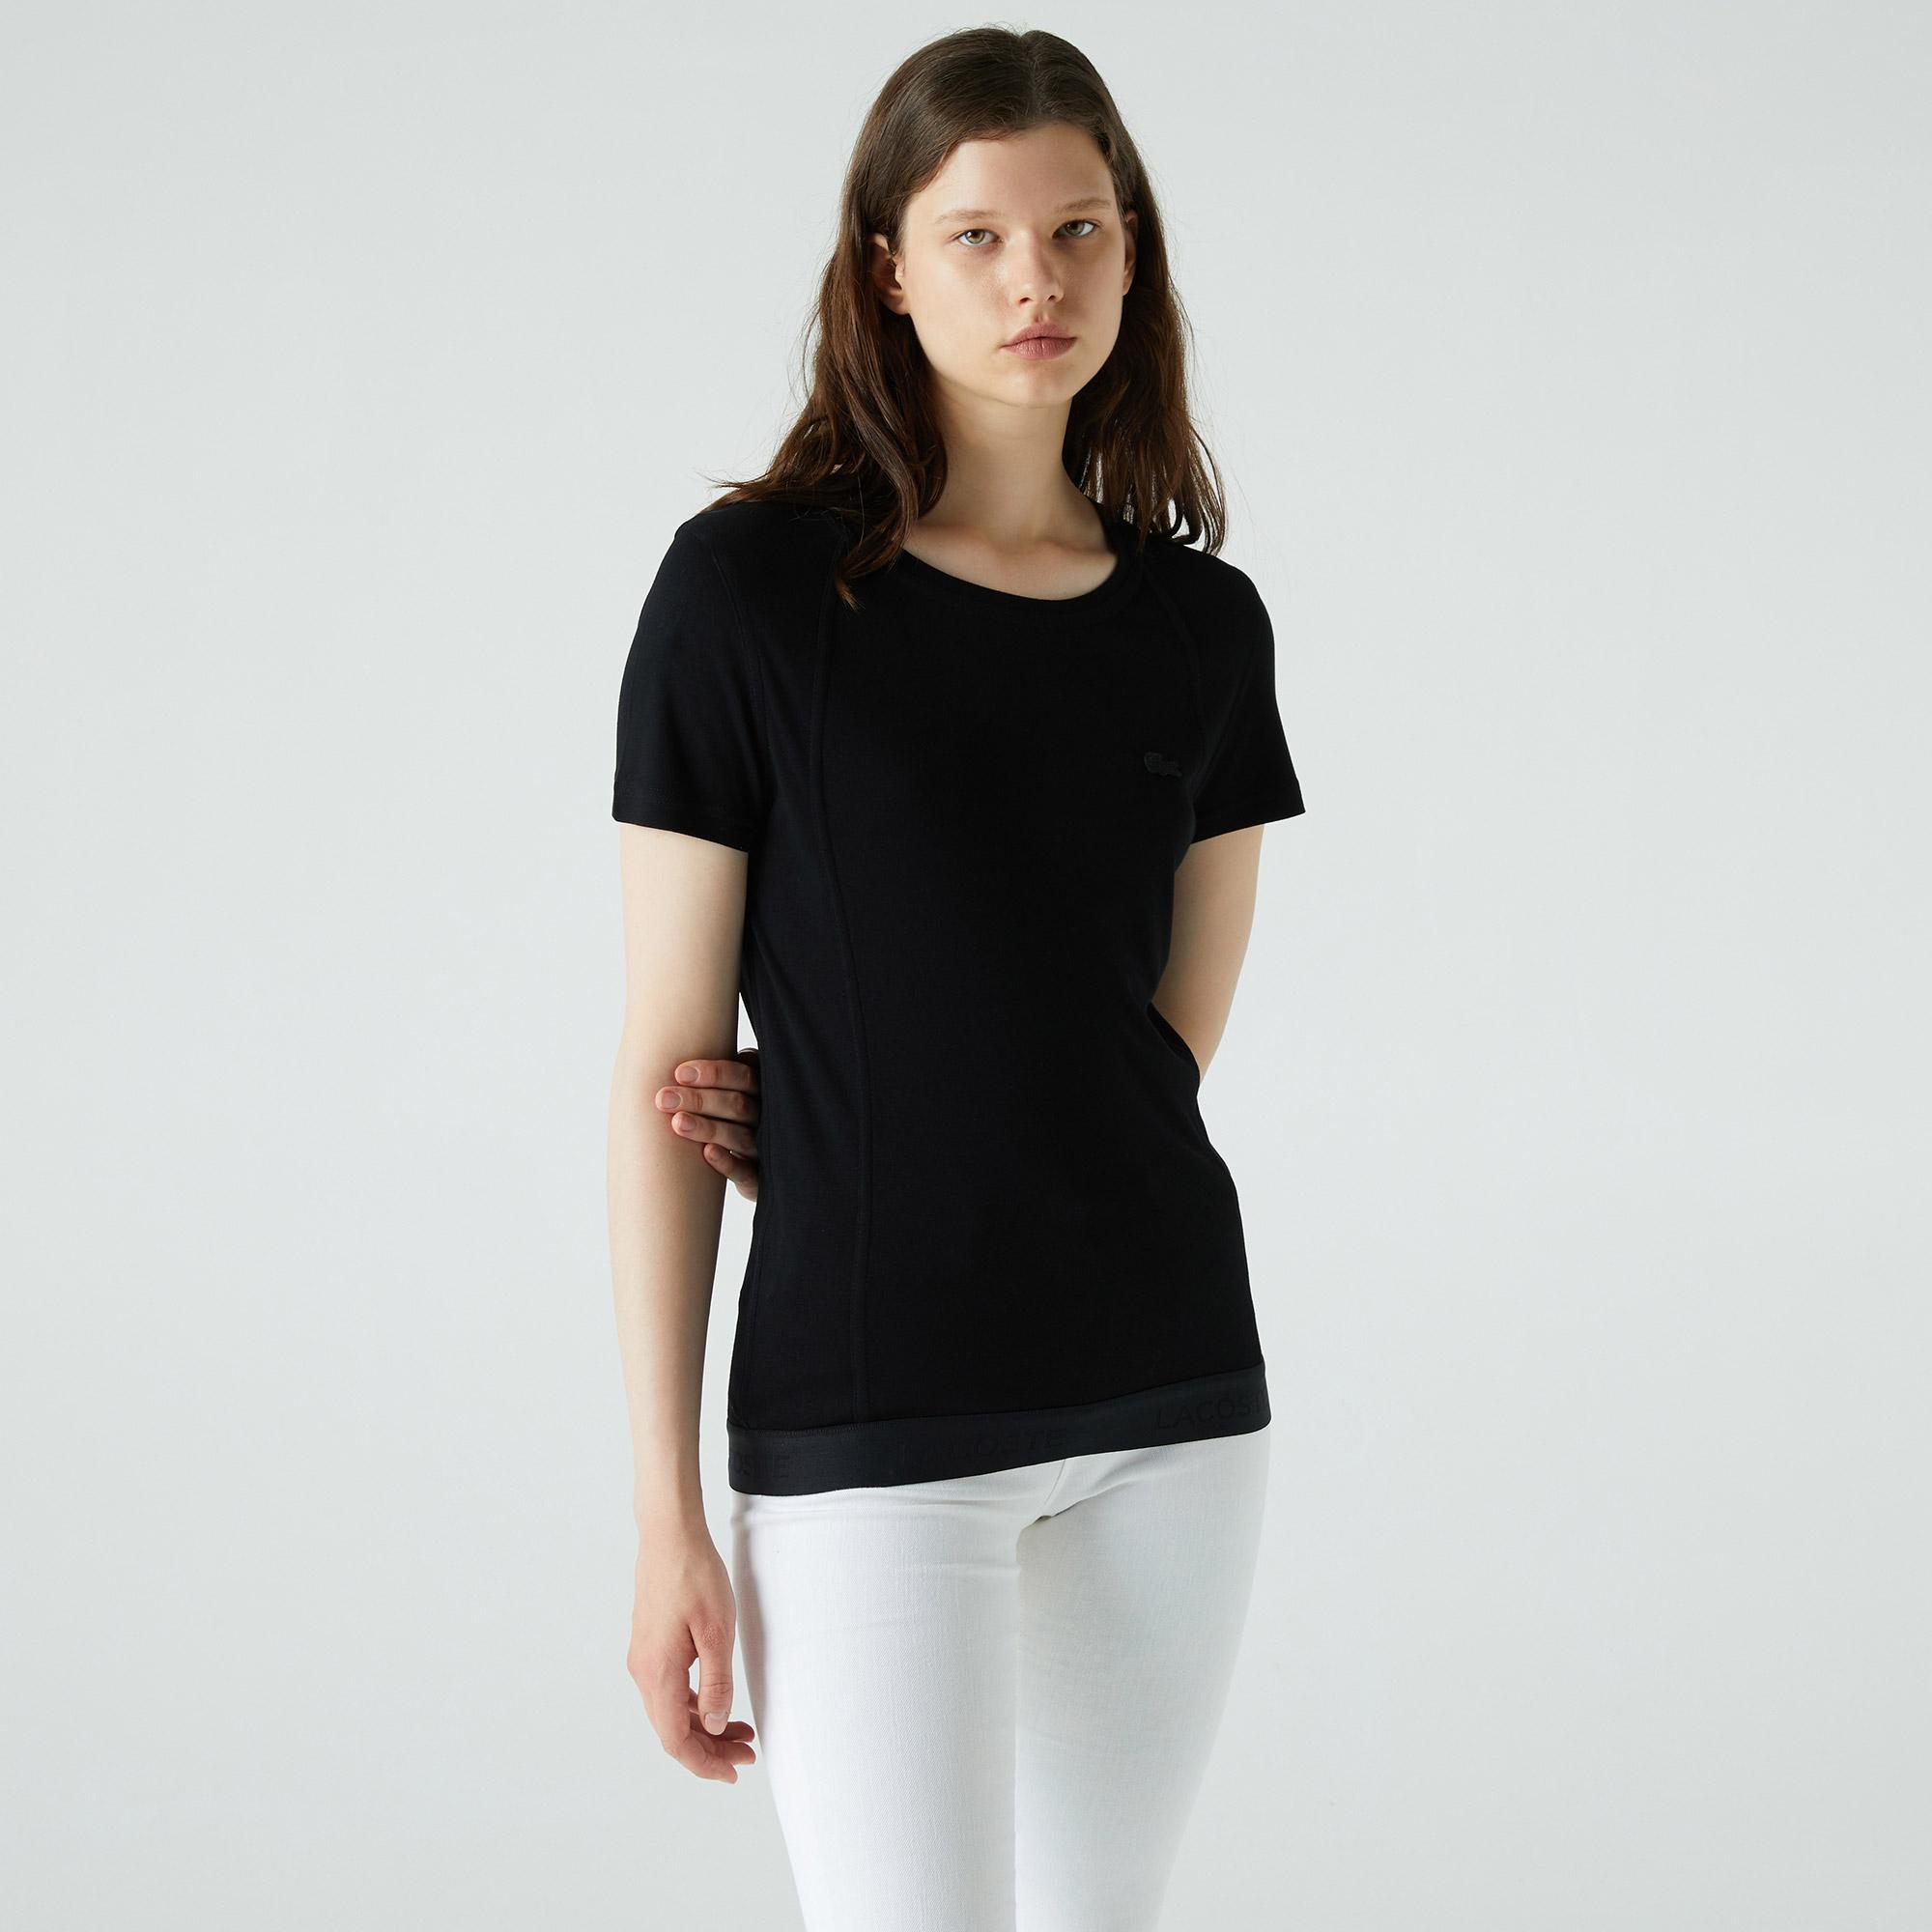 Lacoste Kadın Relaxed Fit Kayık Yaka Siyah T-shirt. 2